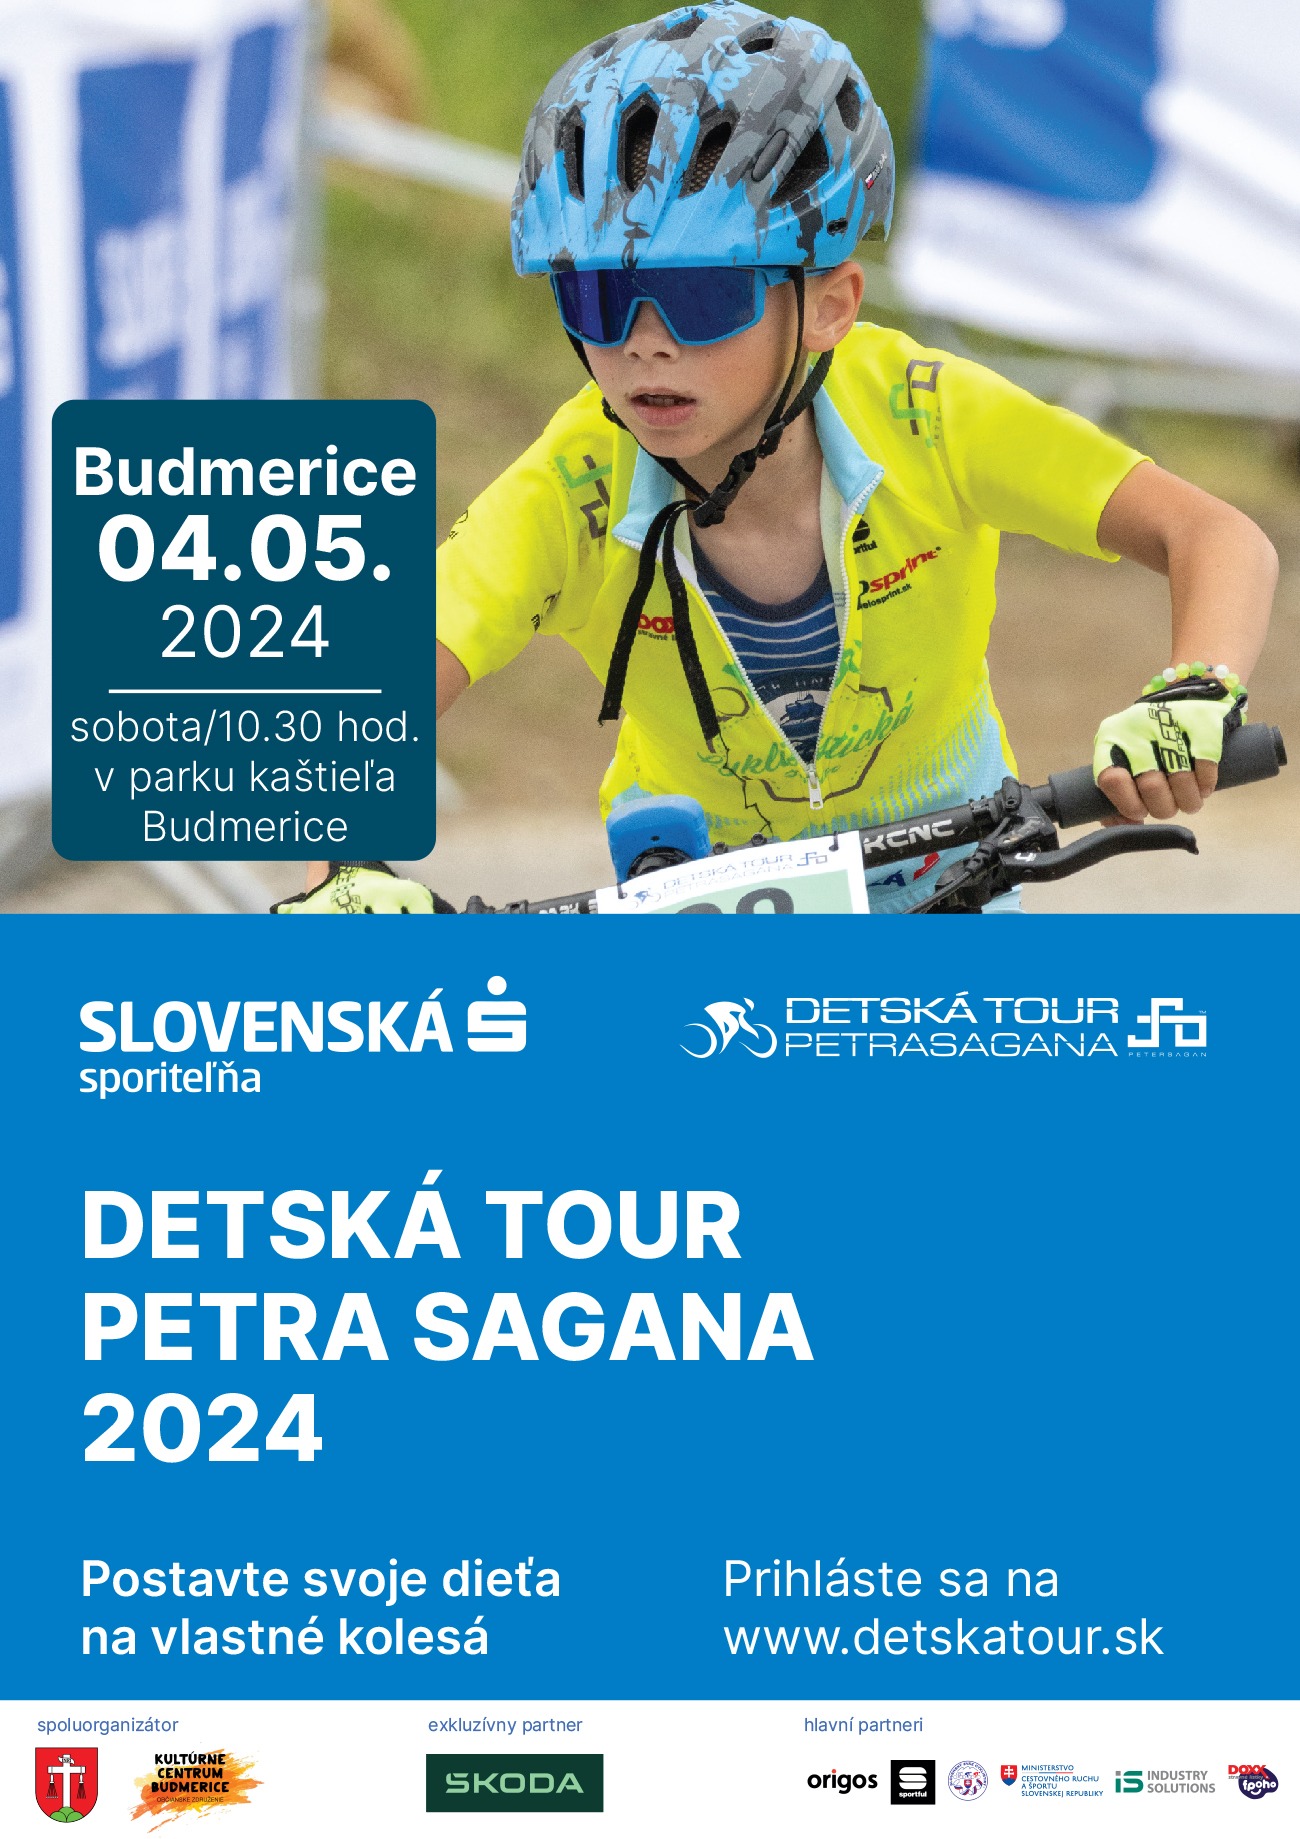 Detská tour Petra Sagana 2024 - Obrázok 1